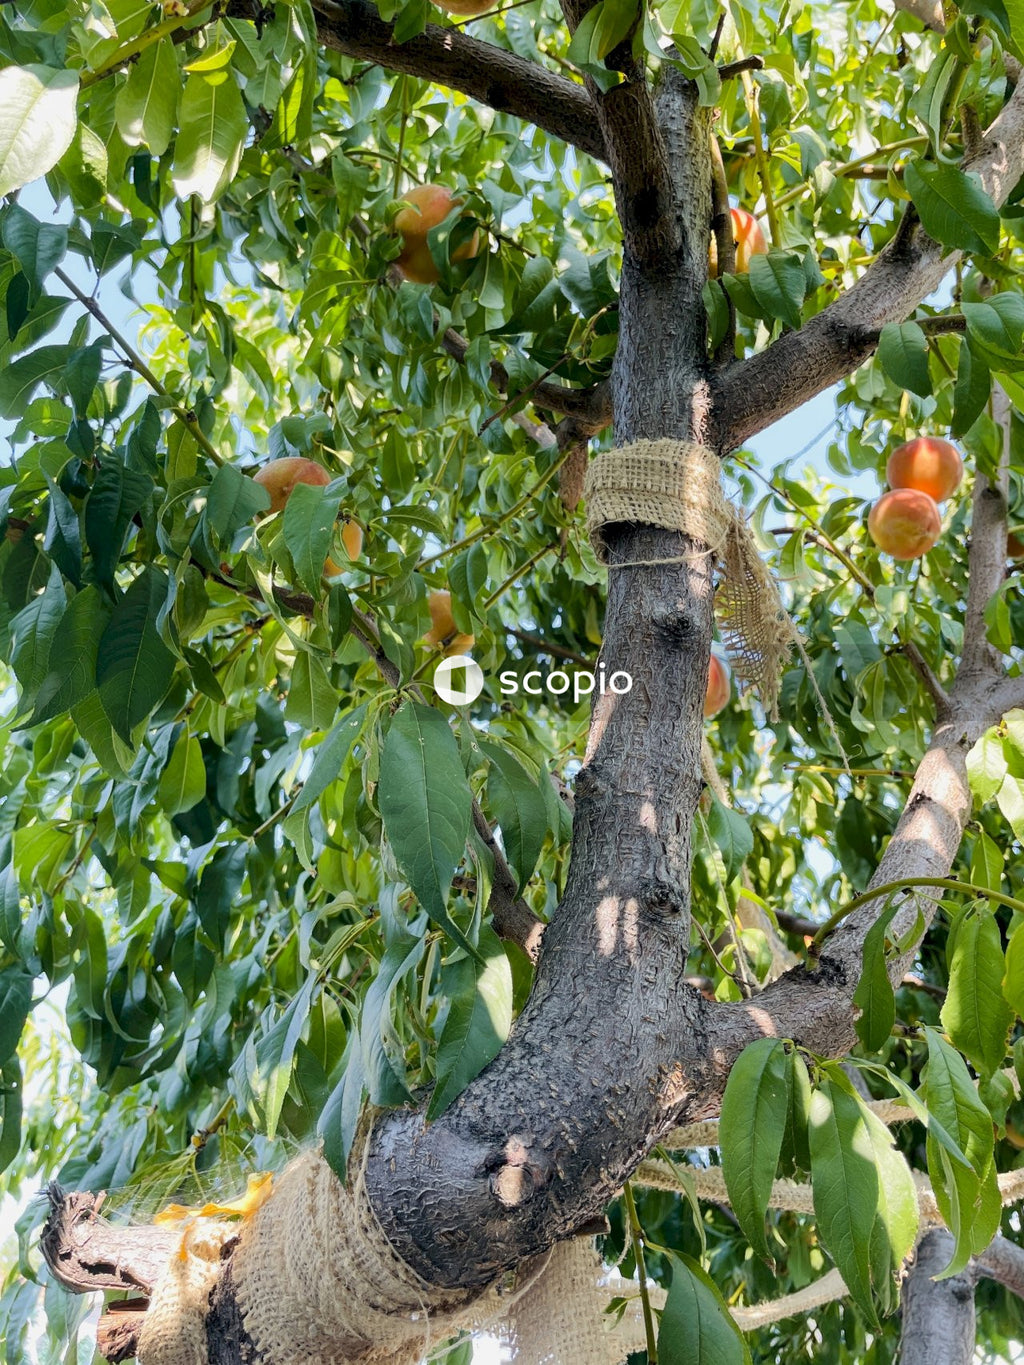 Orange fruit on brown tree